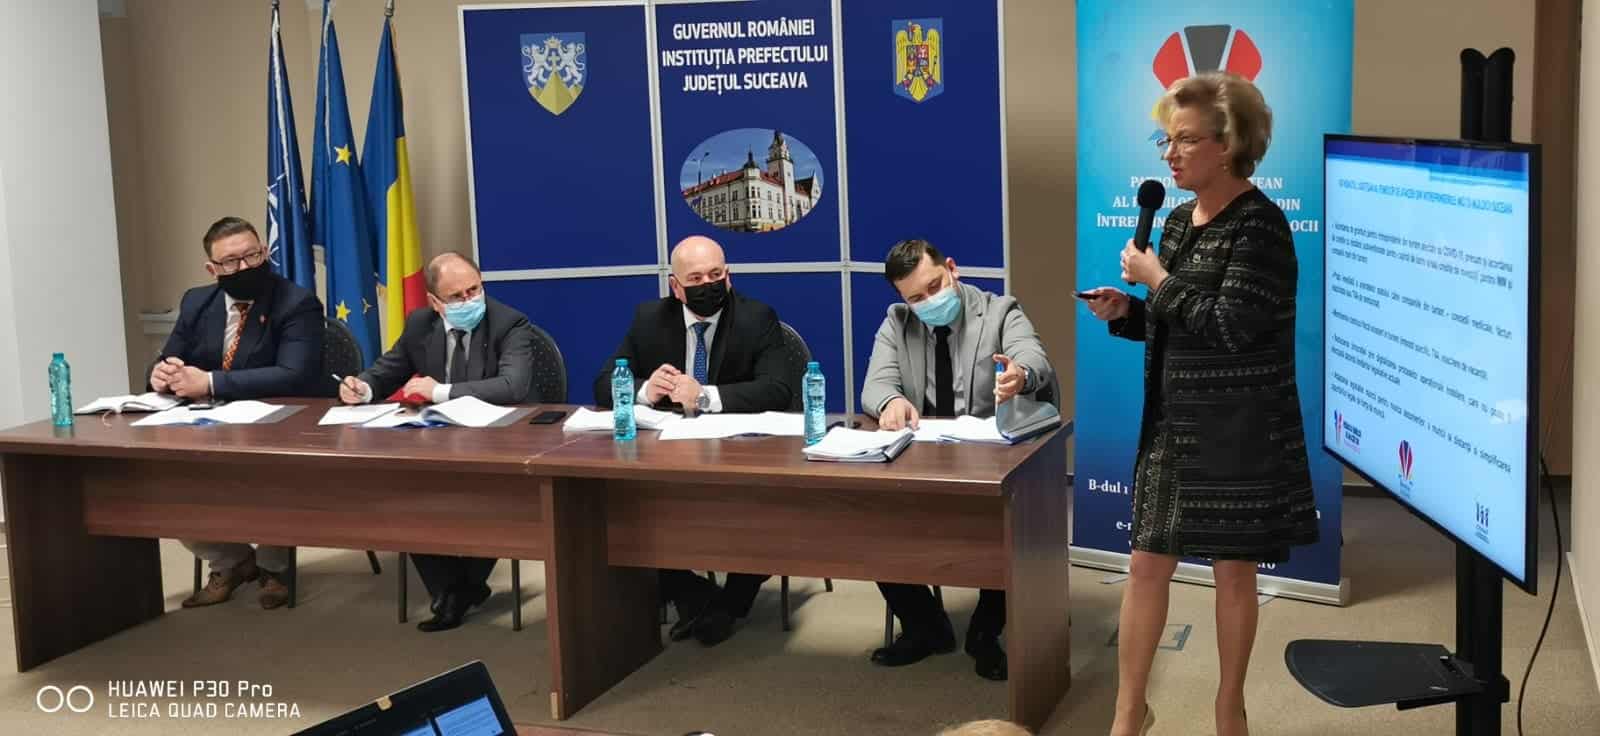 Sedinta COMISIEI DE DIALOG SOCIAL - Moldova Invest